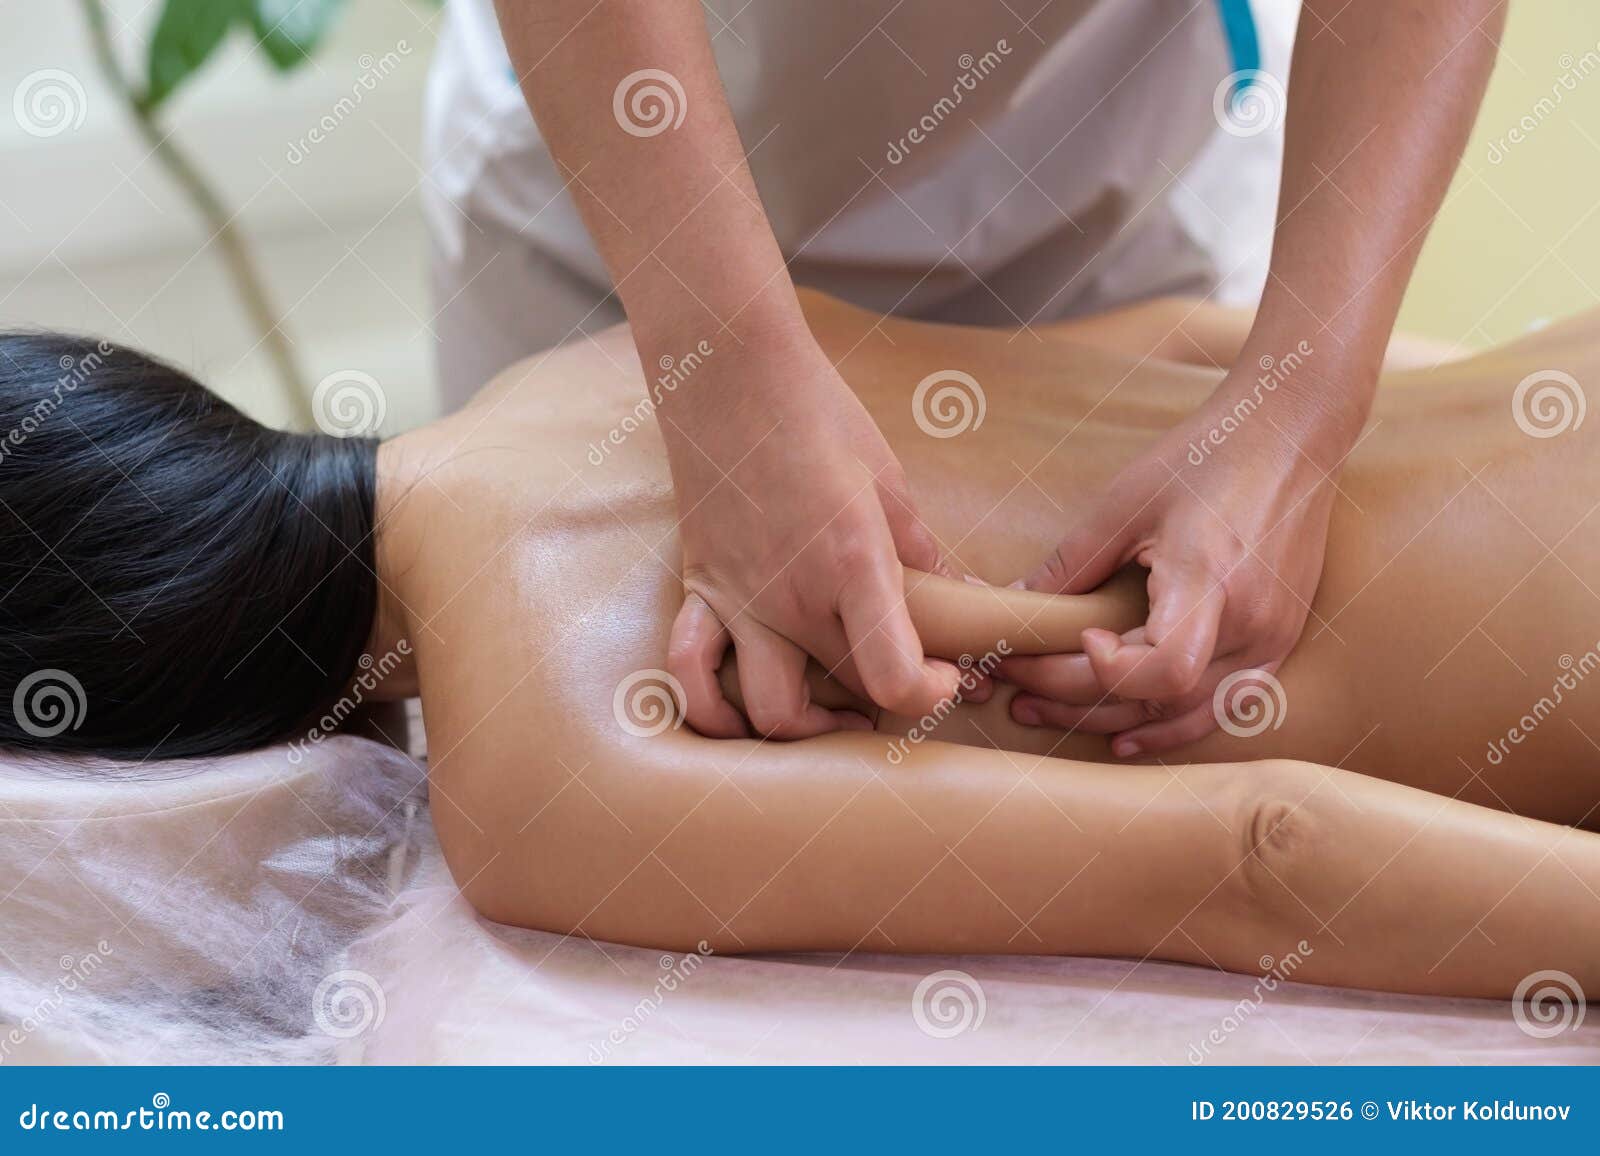 https://thumbs.dreamstime.com/z/caucasian-woman-getting-back-massage-spa-salon-caucasian-women-getting-back-massage-spa-salon-body-care-concept-200829526.jpg